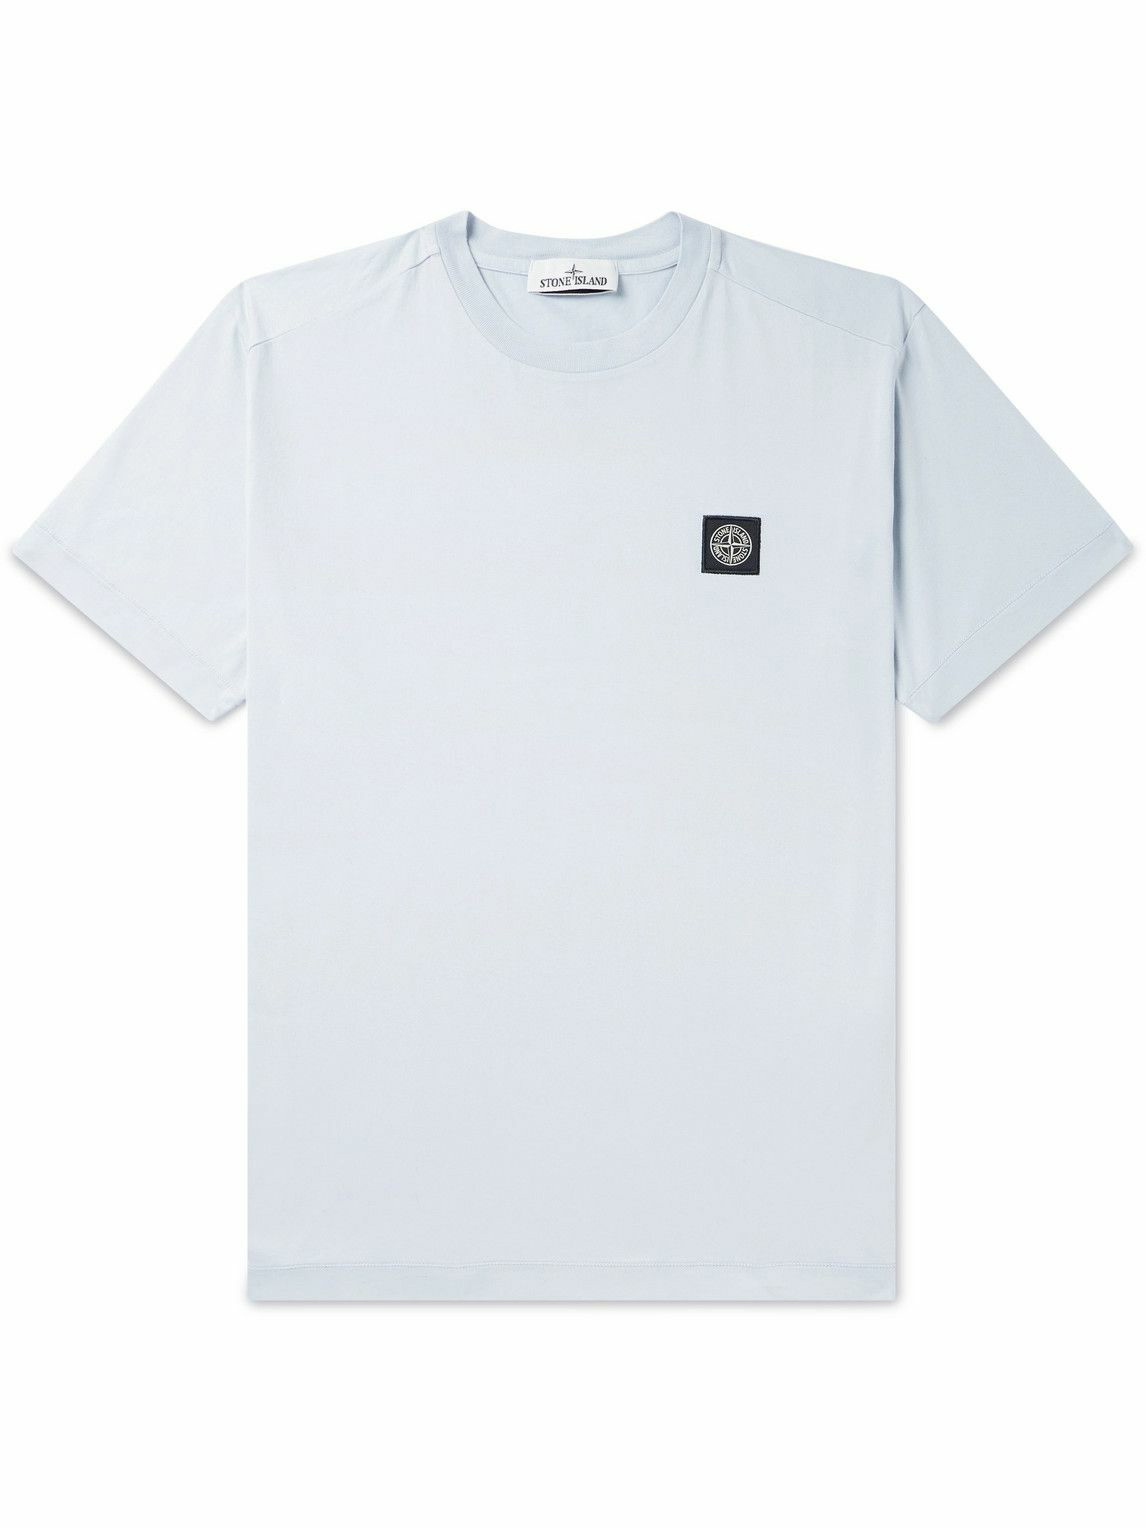 Stone Island - Logo-Appliquéd Cotton-Jersey T-Shirt - Blue Stone Island